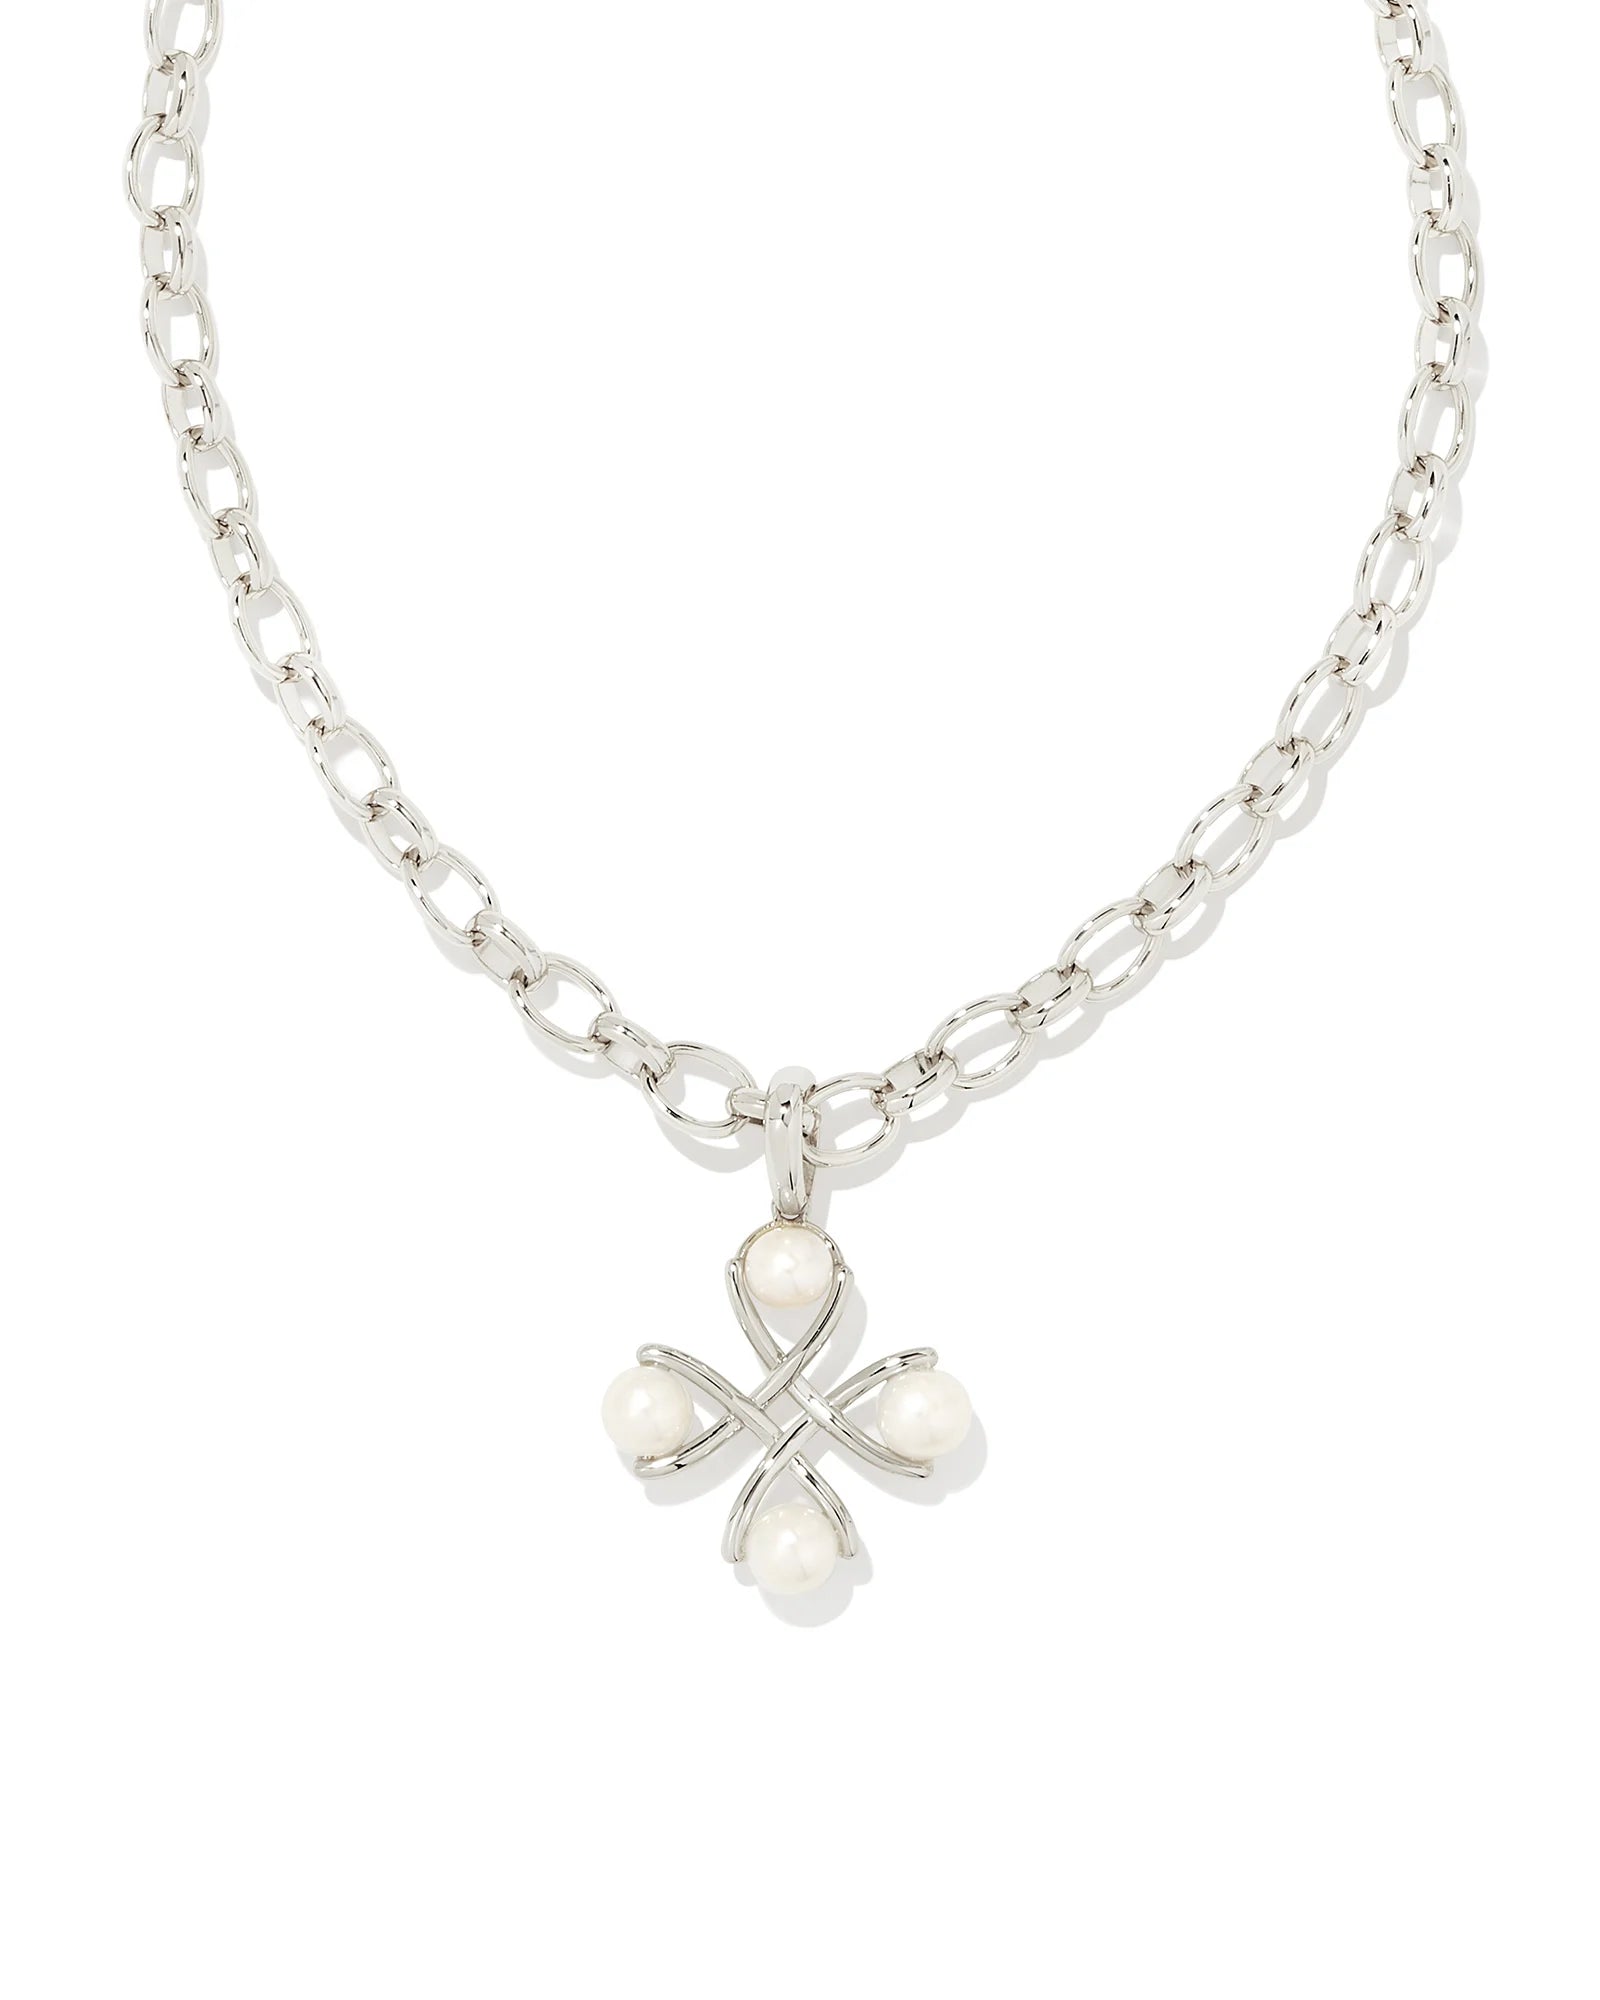 Mallory Gold Pendant Necklace in Rose Quartz | Kendra Scott | Kendra  jewelry, Gold pendant necklace, Preppy jewelry